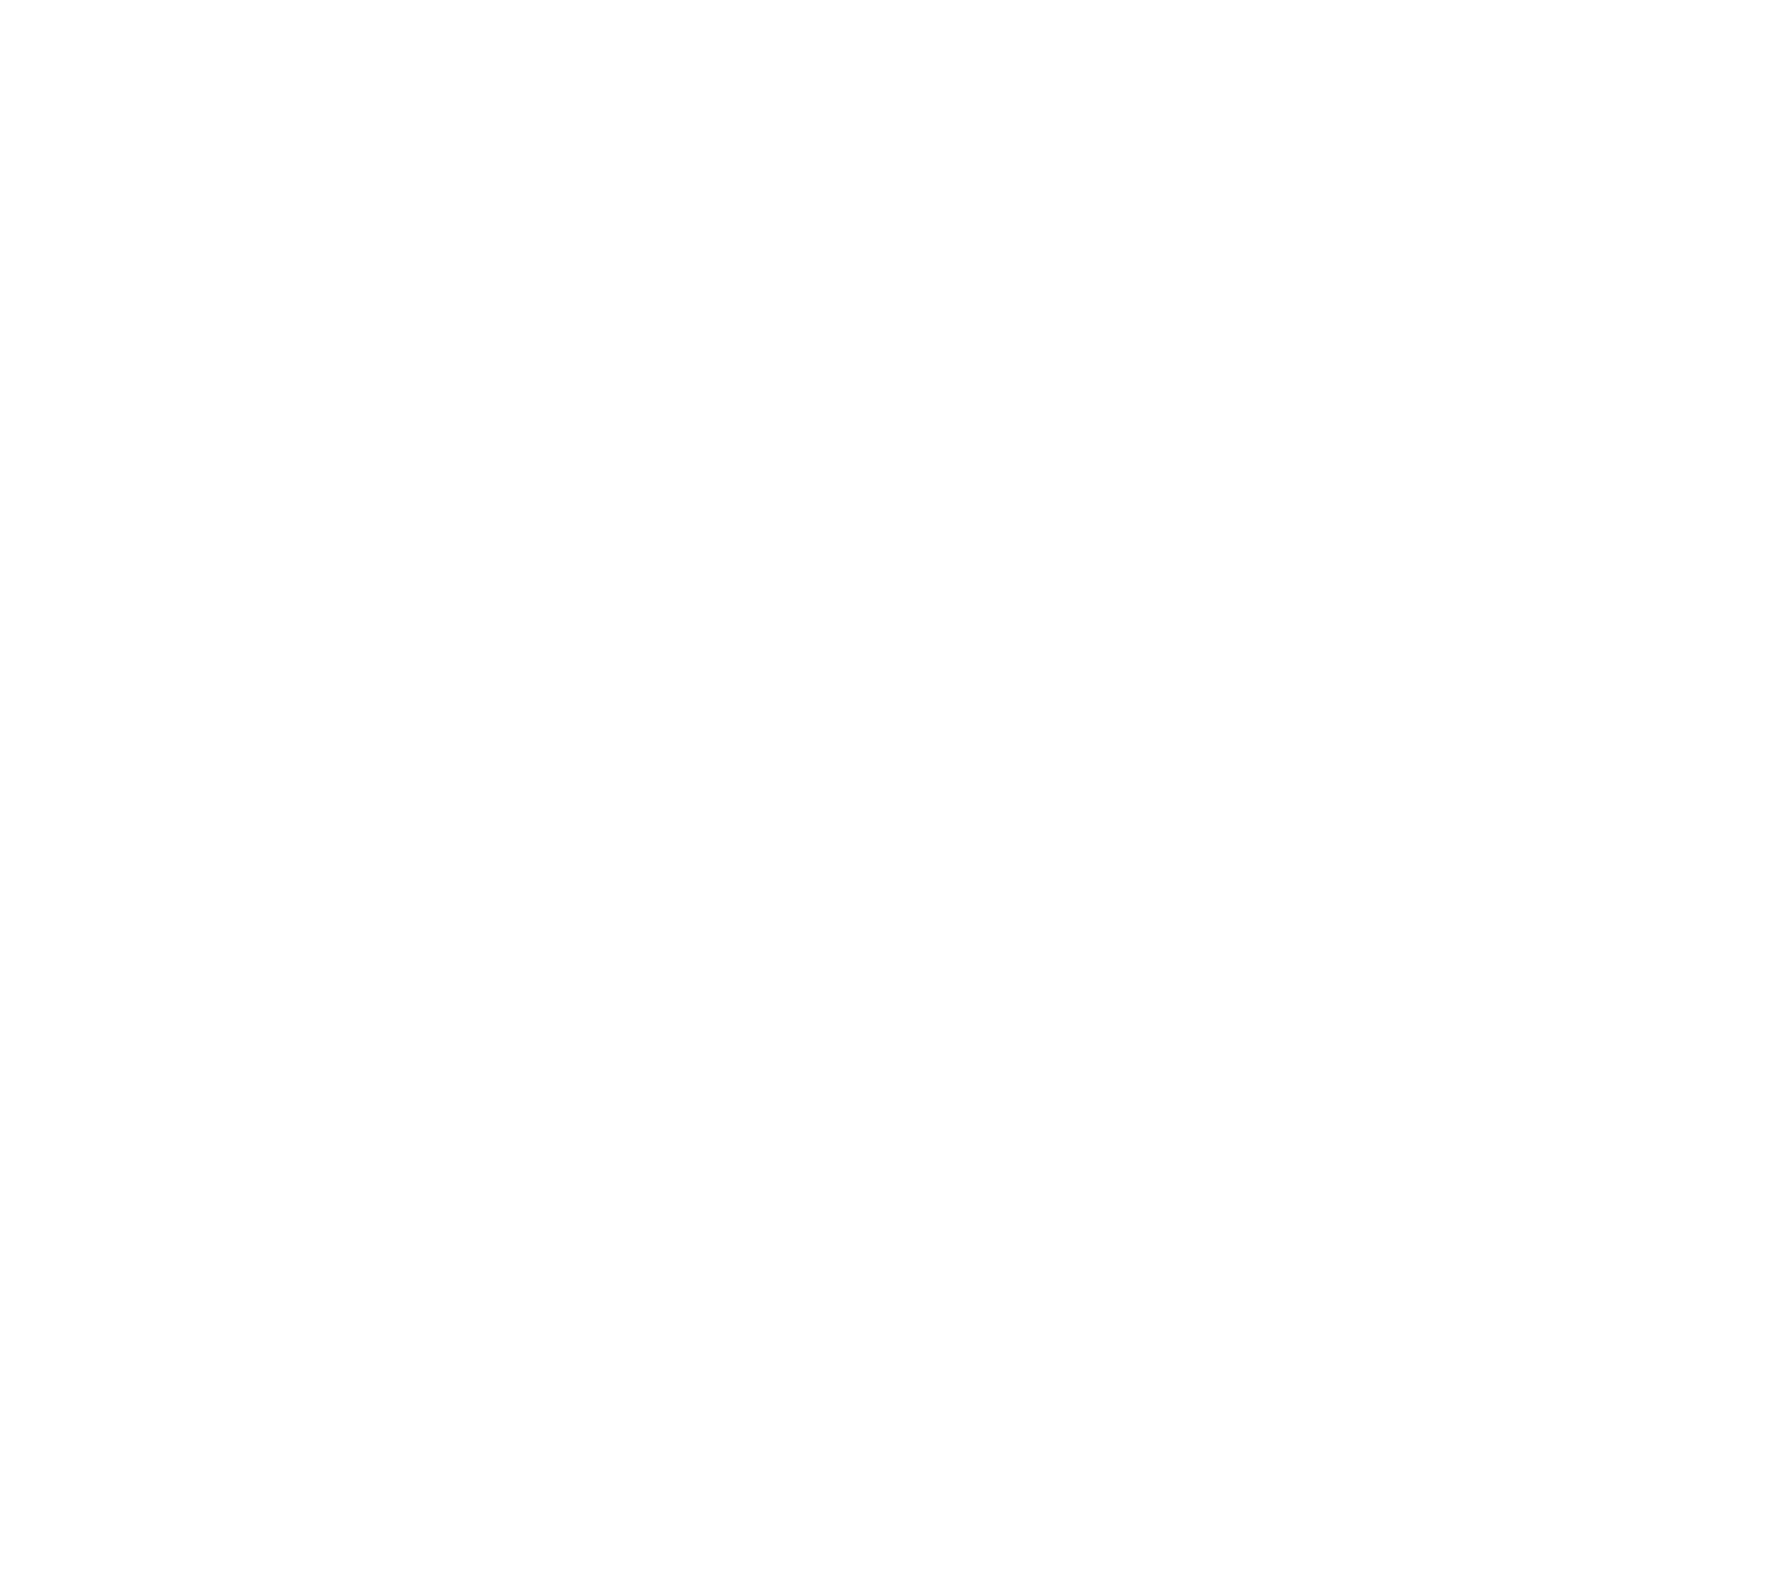 eldarune-logo.png